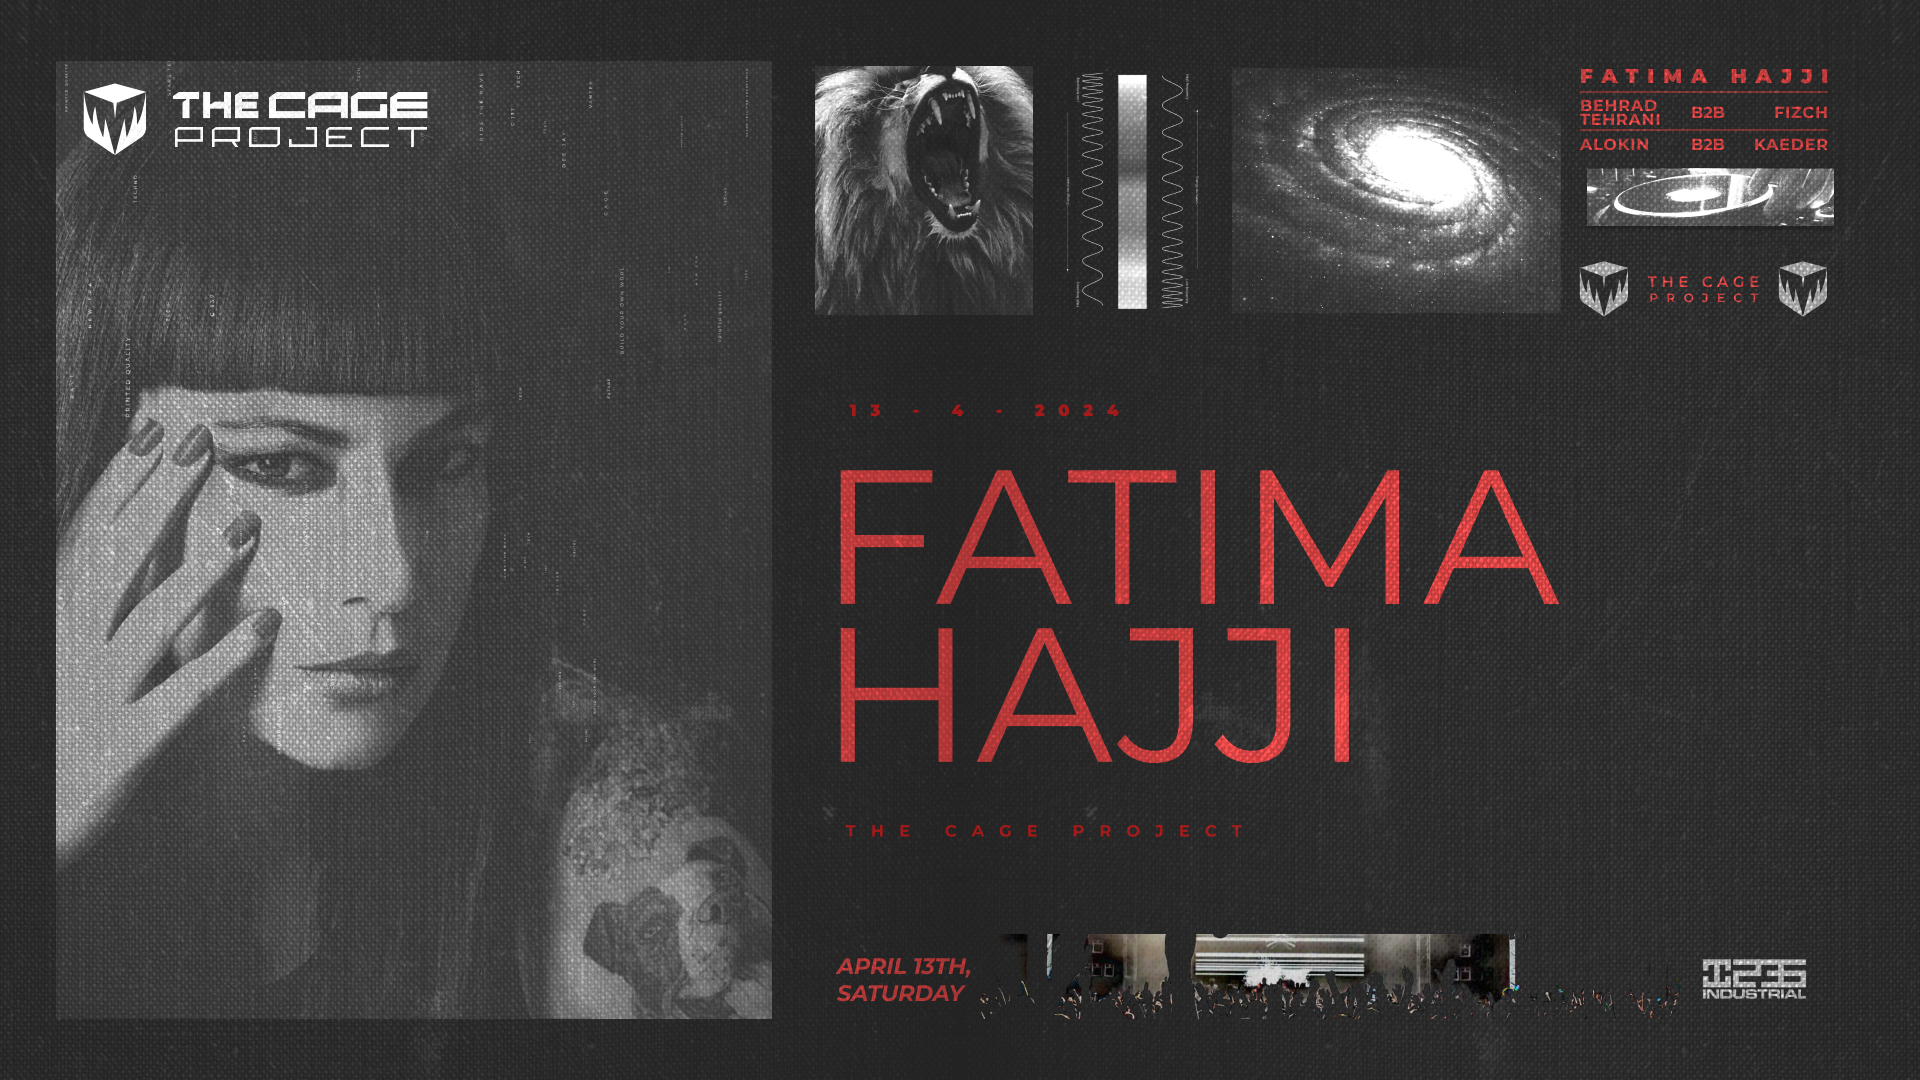 THE CAGE PROJECT: Fatima Hajji - フライヤー裏